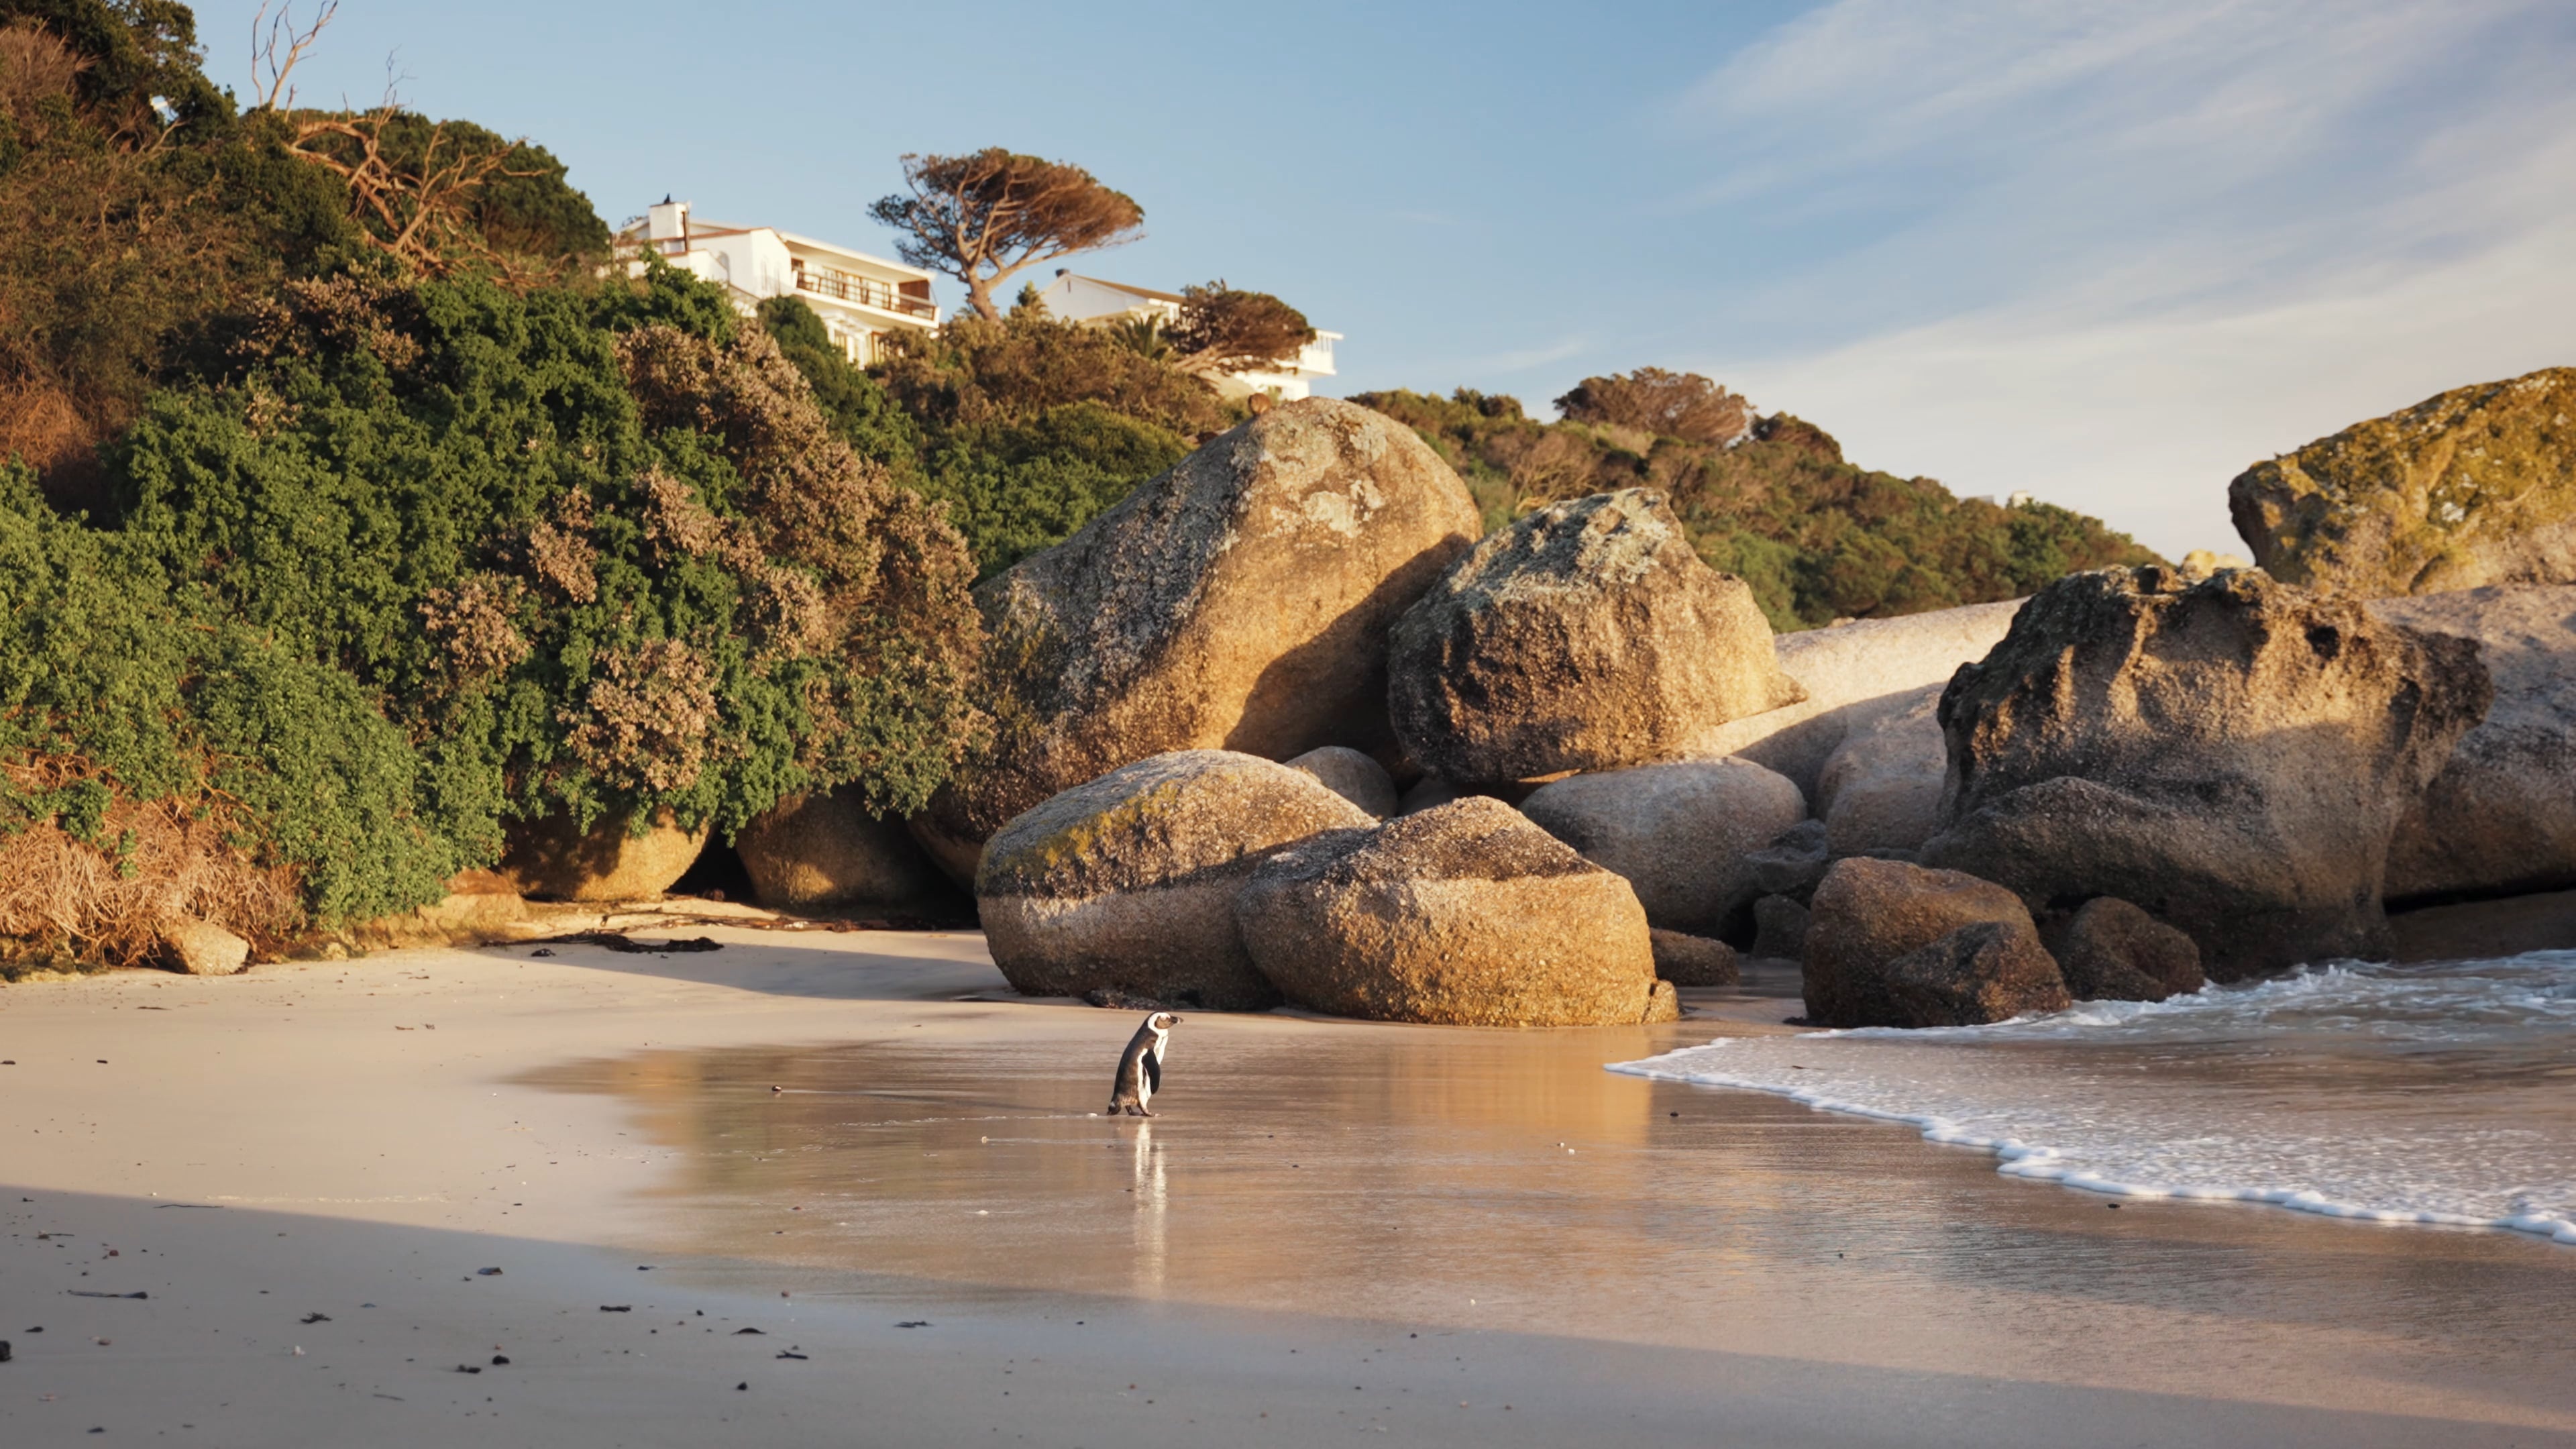 Shoreline adventure, African penguin stroll, Coastal habitat, Free and wild, 3840x2160 4K Desktop